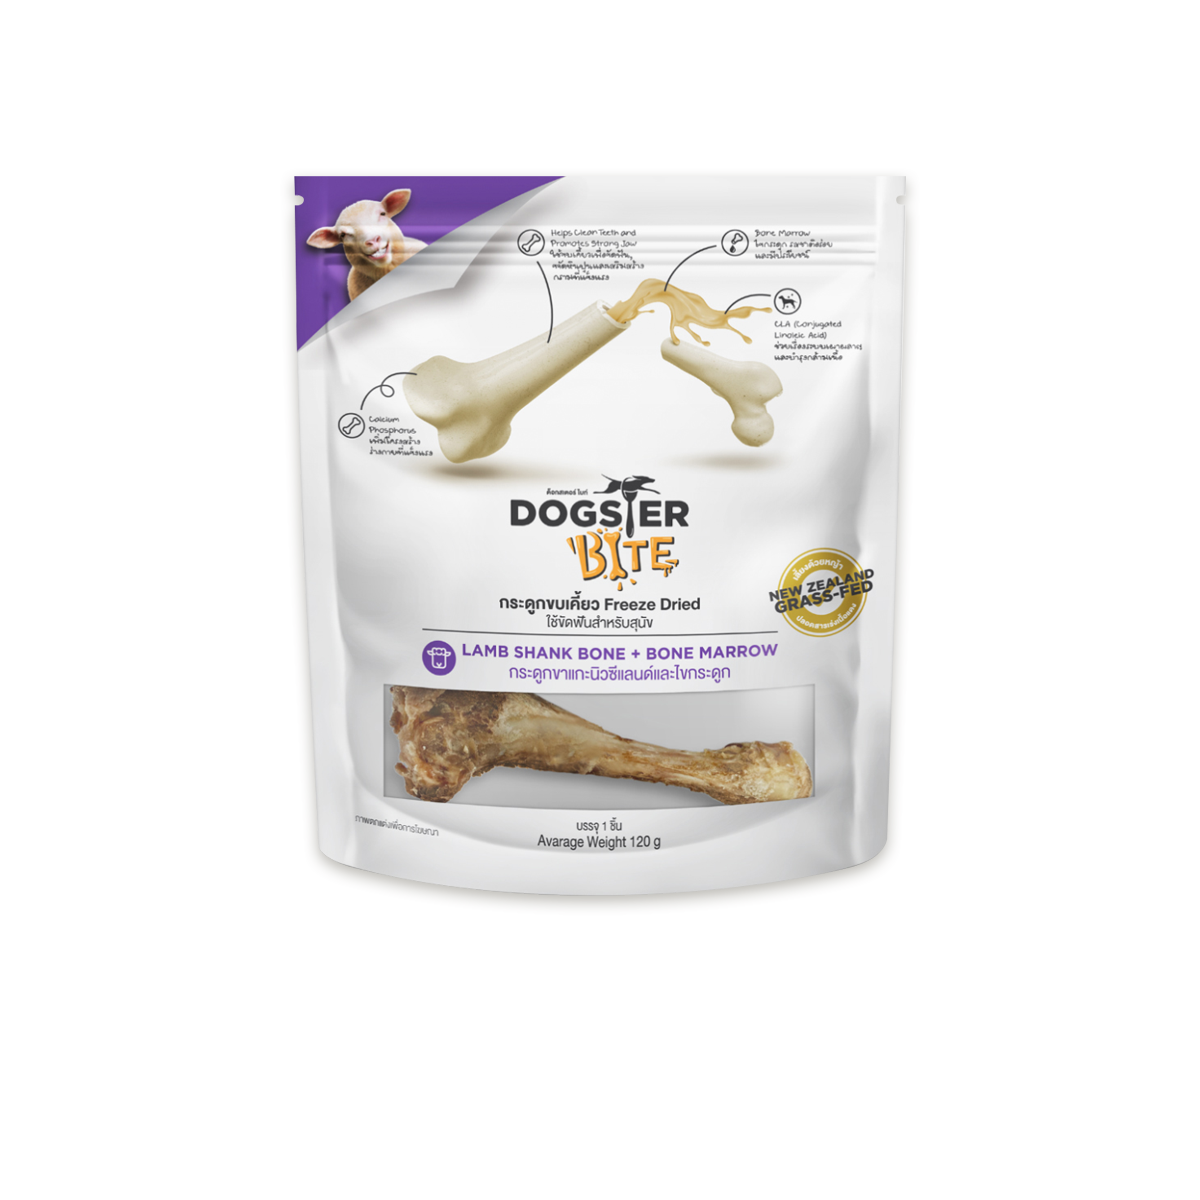 DOGSTER BITE Freeze Dried Dog Chew with Bone Marrow ด็อกสเตอร์ ไบท์ กระดูกขบเคี้ยว และไขกระดูก ฟรีซดราย ใช้ขัดฟันสำหรับสุนัข ขนาด 120 กรัม